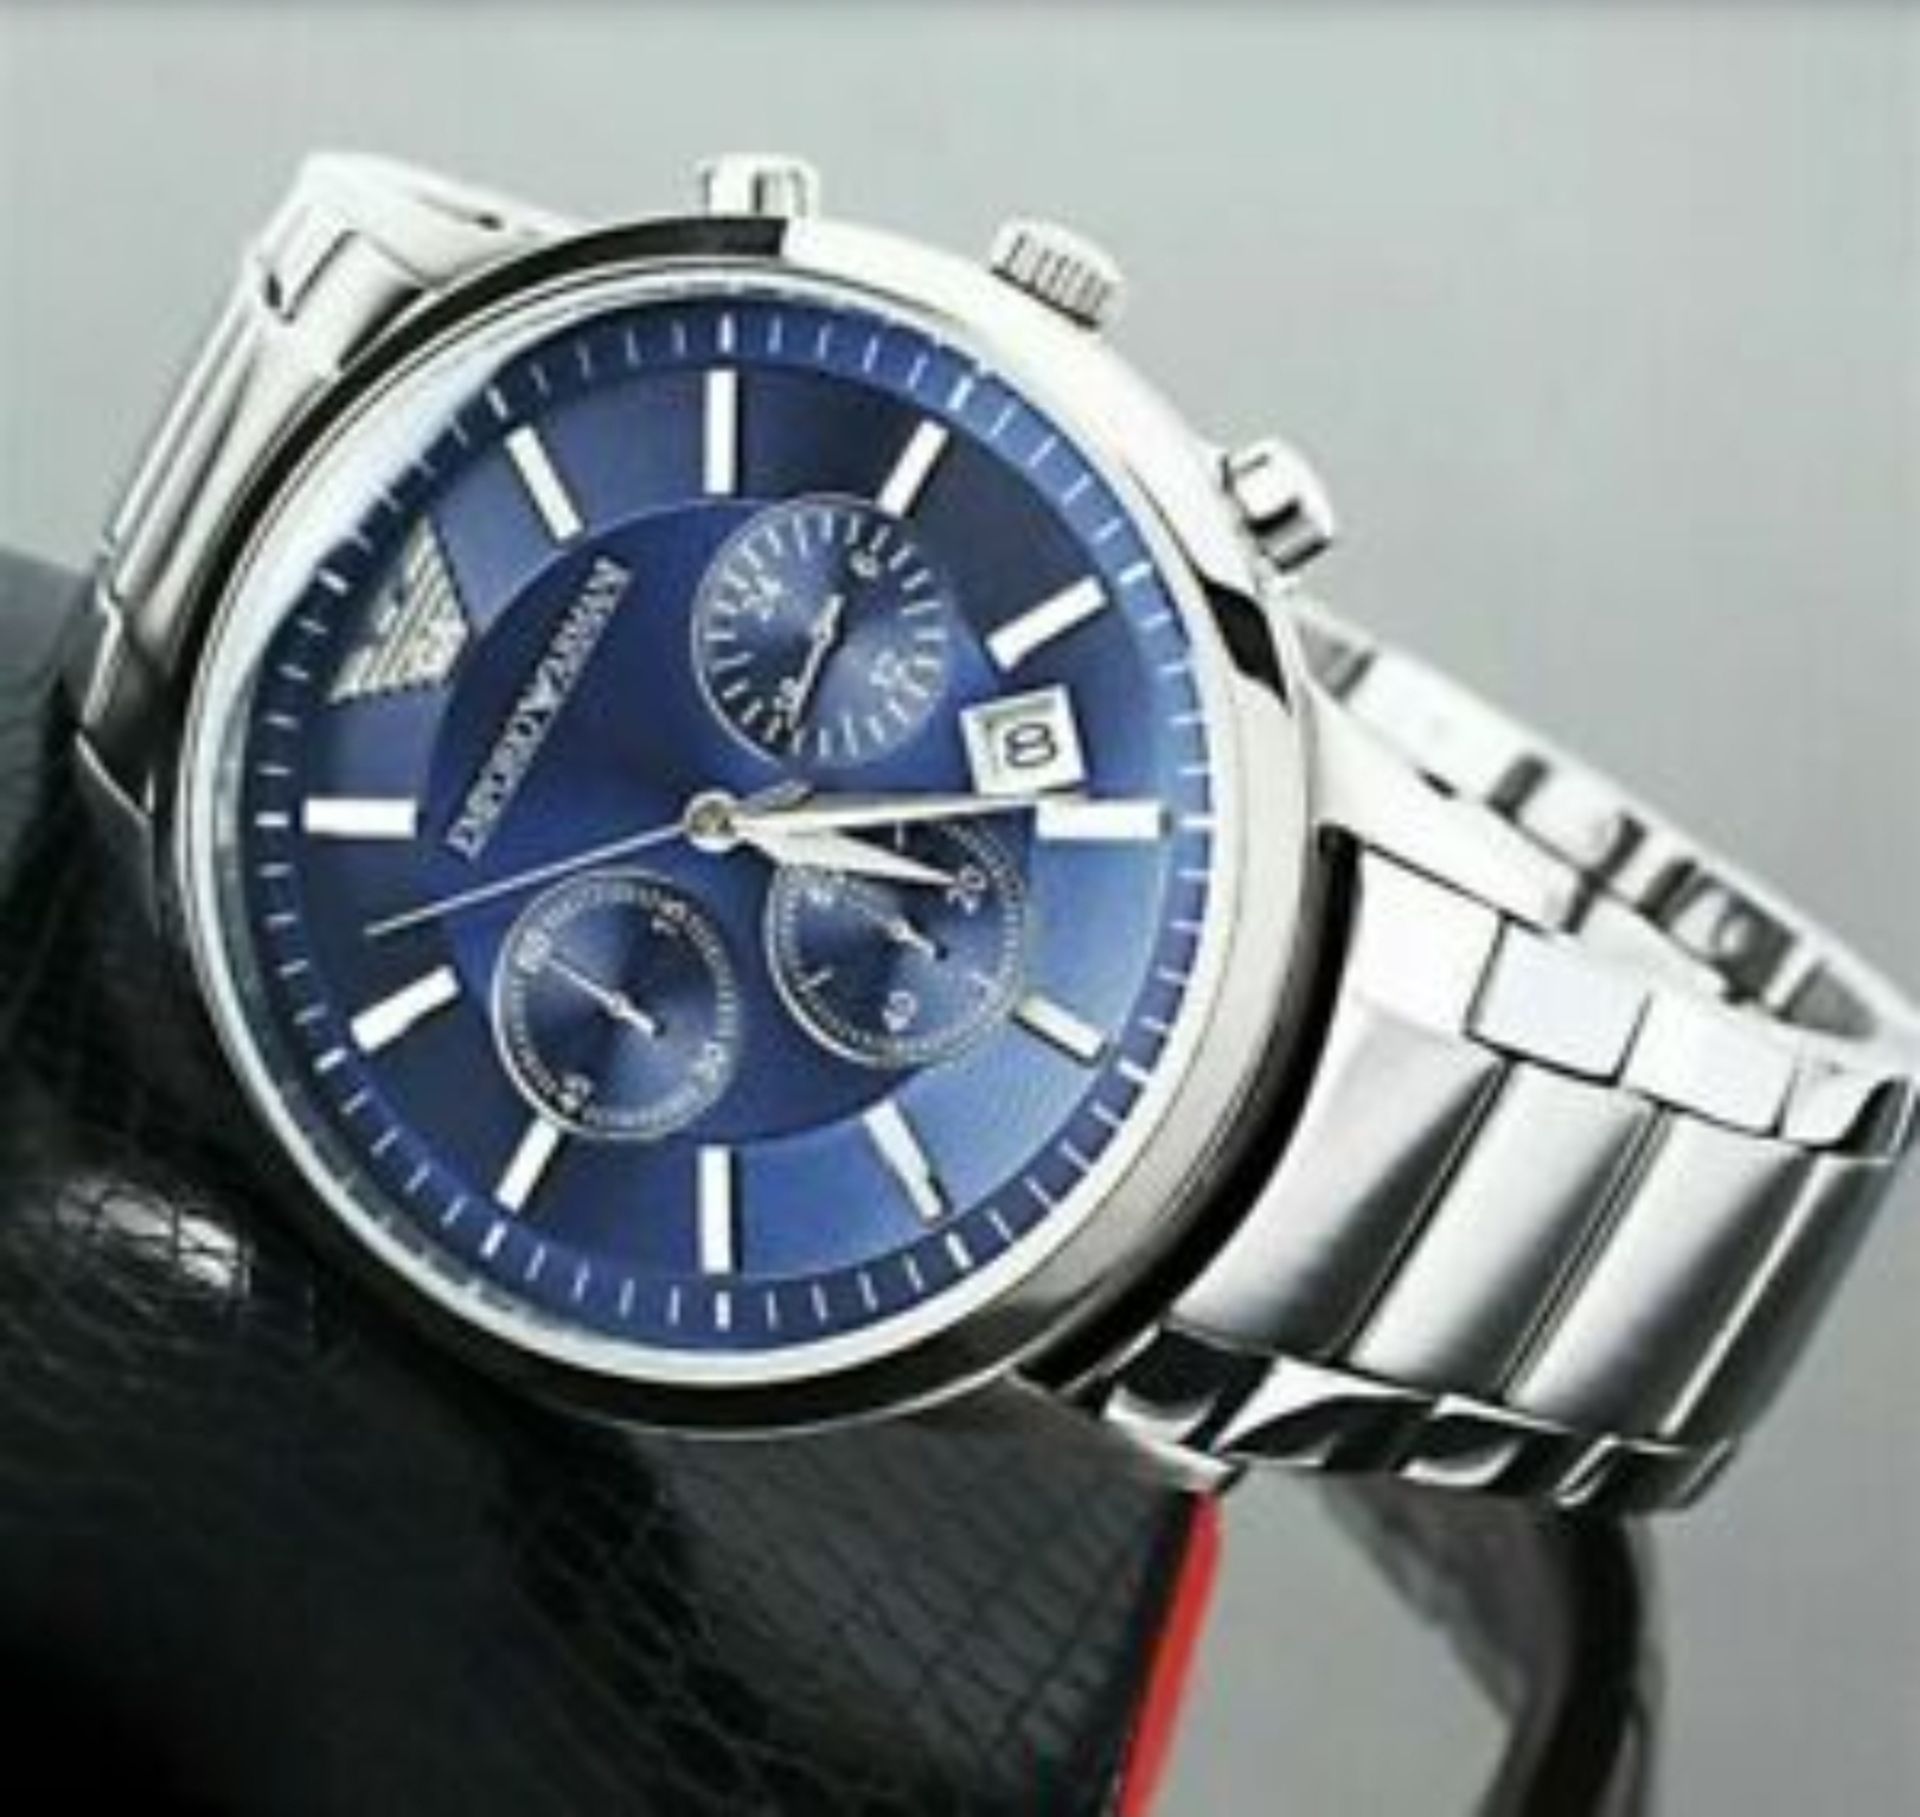 Emporio Armani AR2448 Men's Blue Dial Silver Bracelet Chronograph Watch - Image 2 of 5